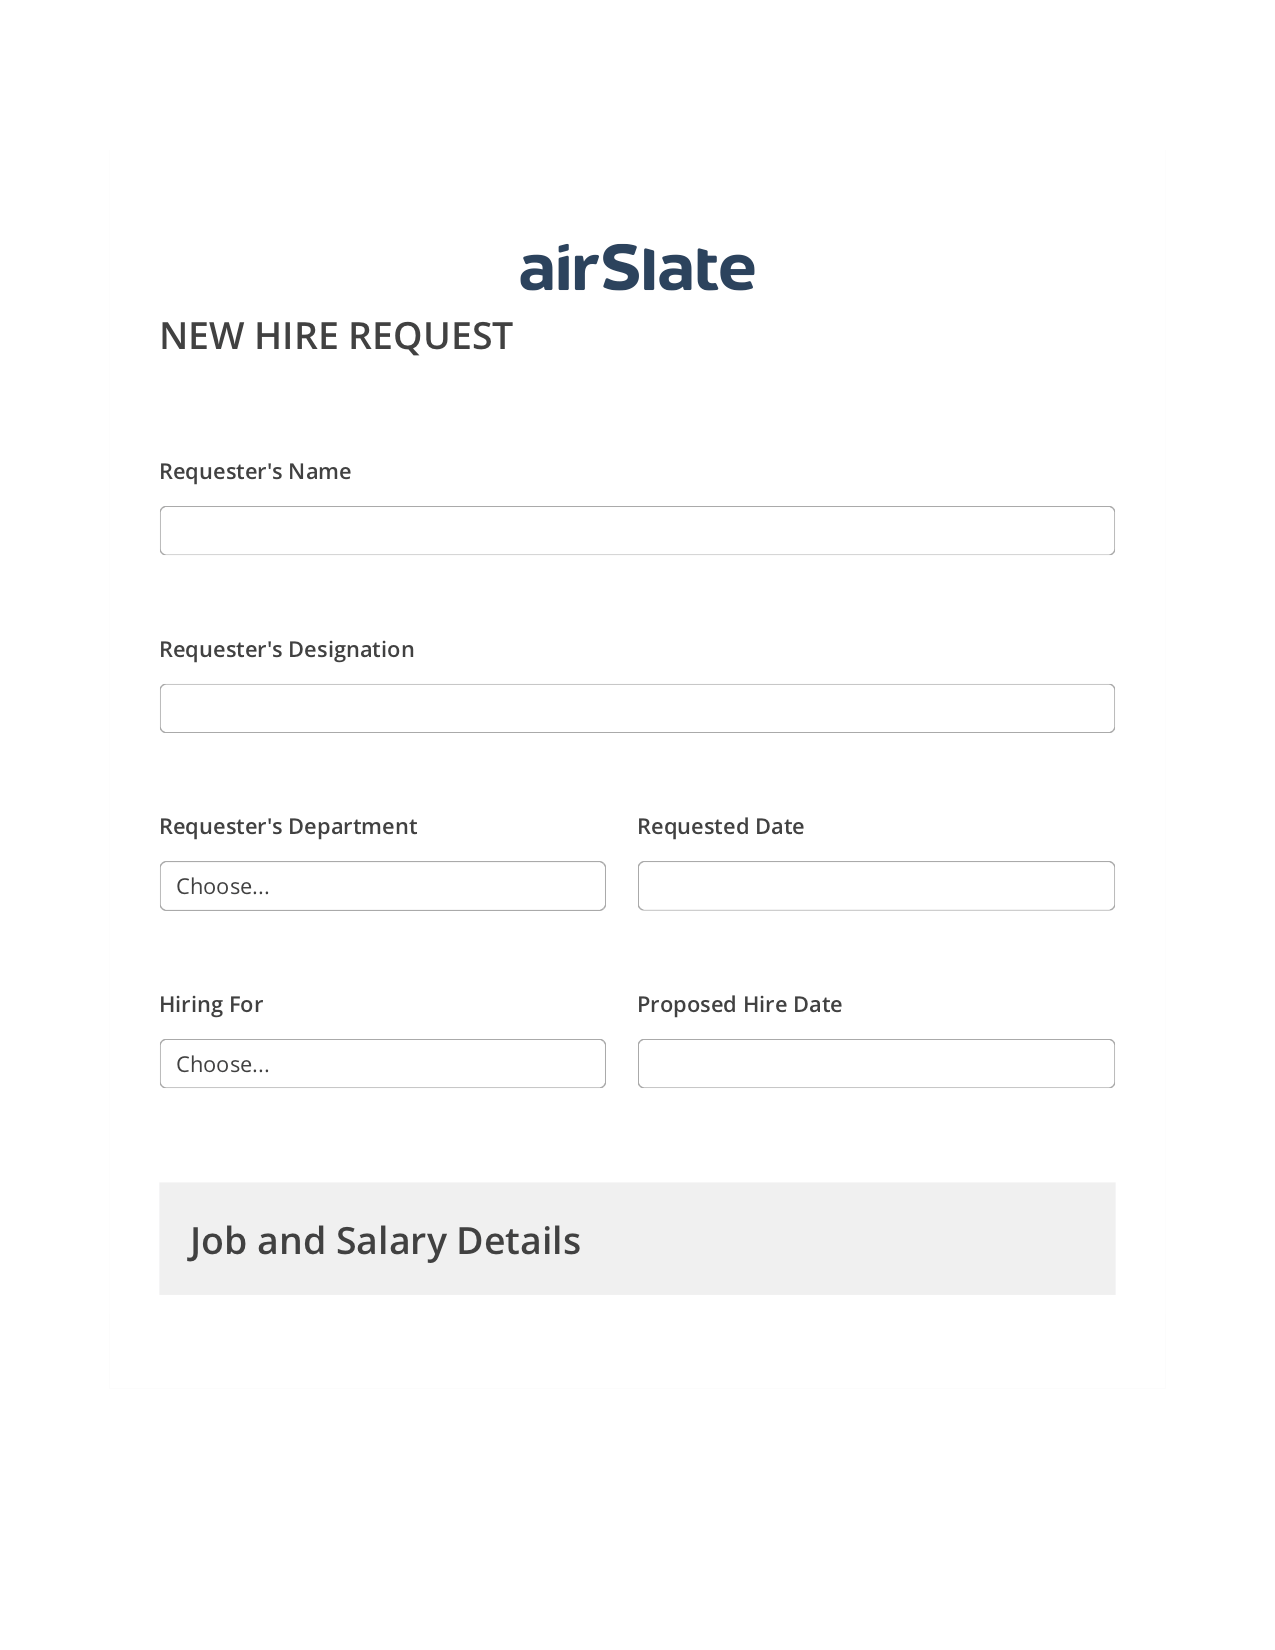 Hiring Request Flow Pre-fill from Google Sheet Dropdown Options Bot